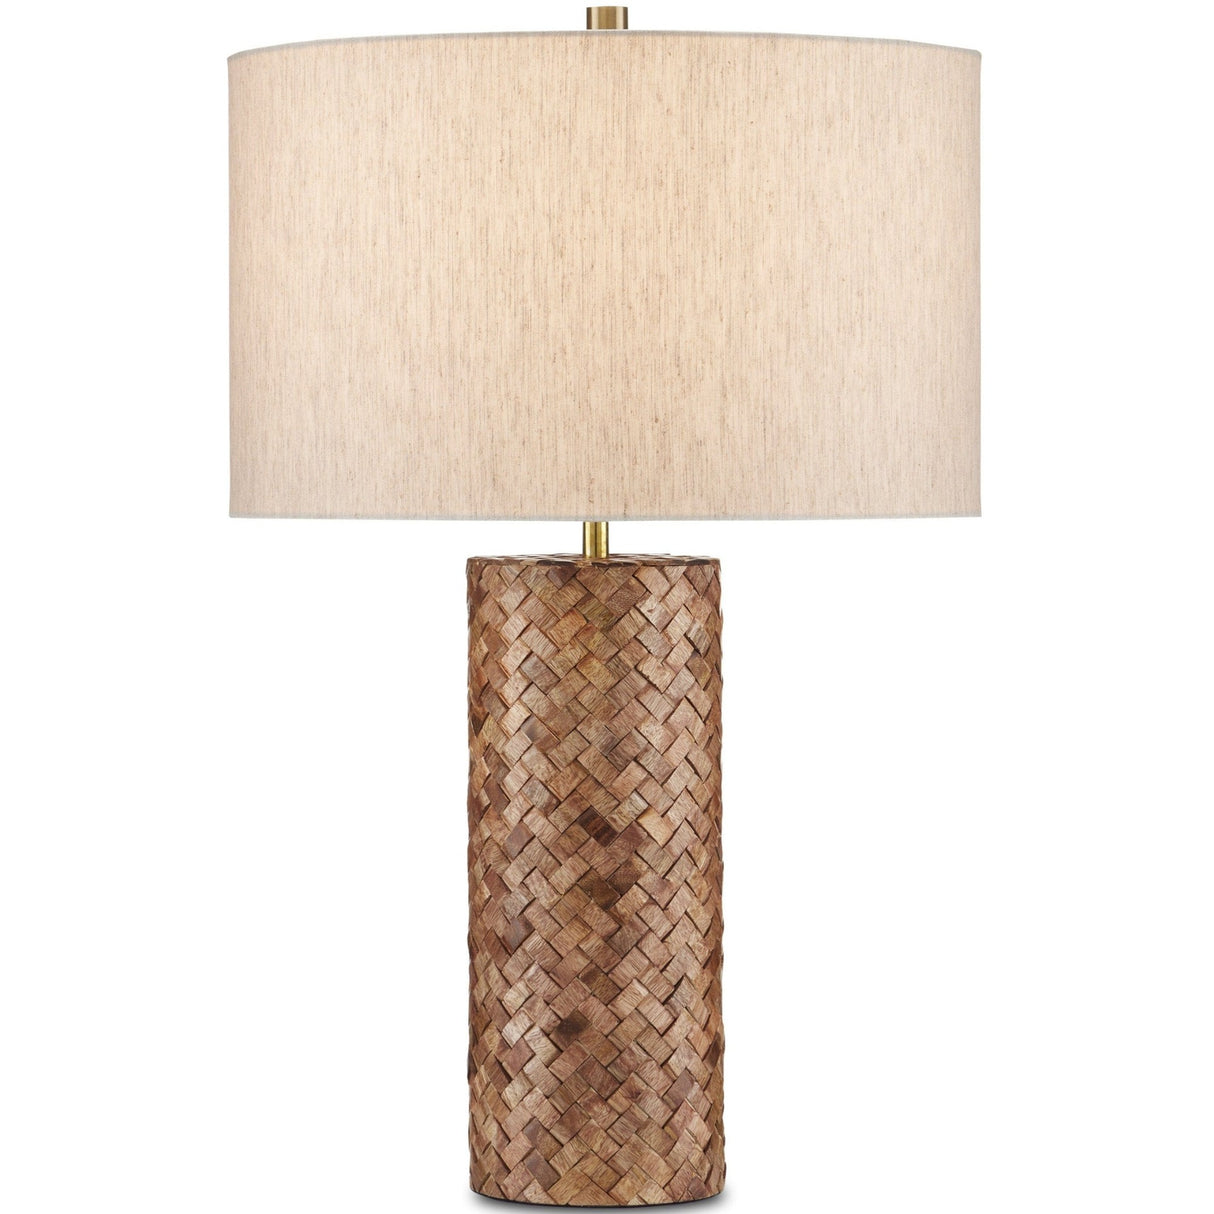 Currey & Company Meraki Wood Table Lamp Table Lamps currey-co-6000-0883 633306052956